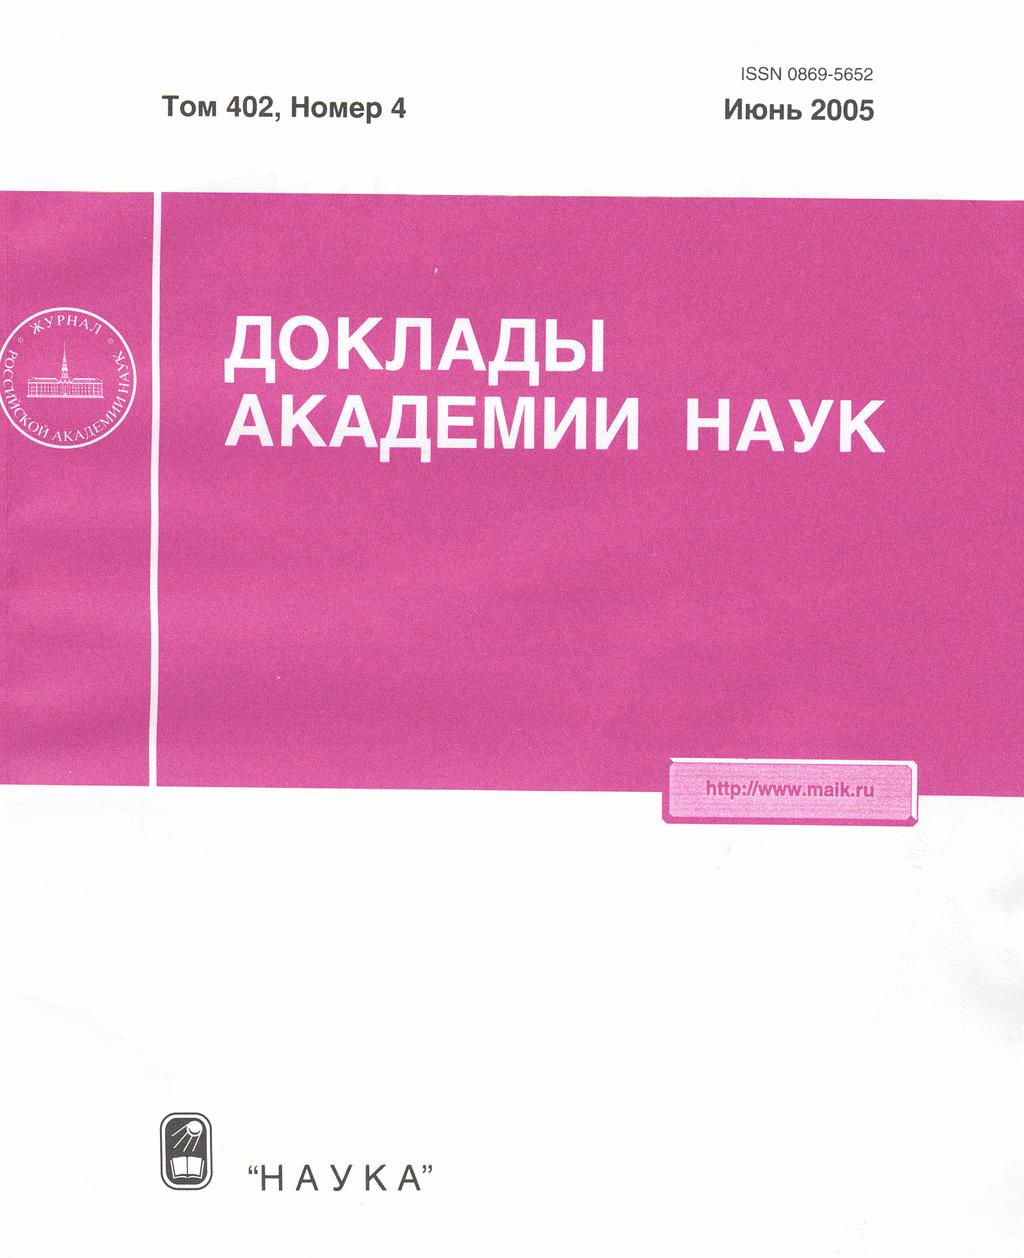 ocean published in Doklady, 2005.